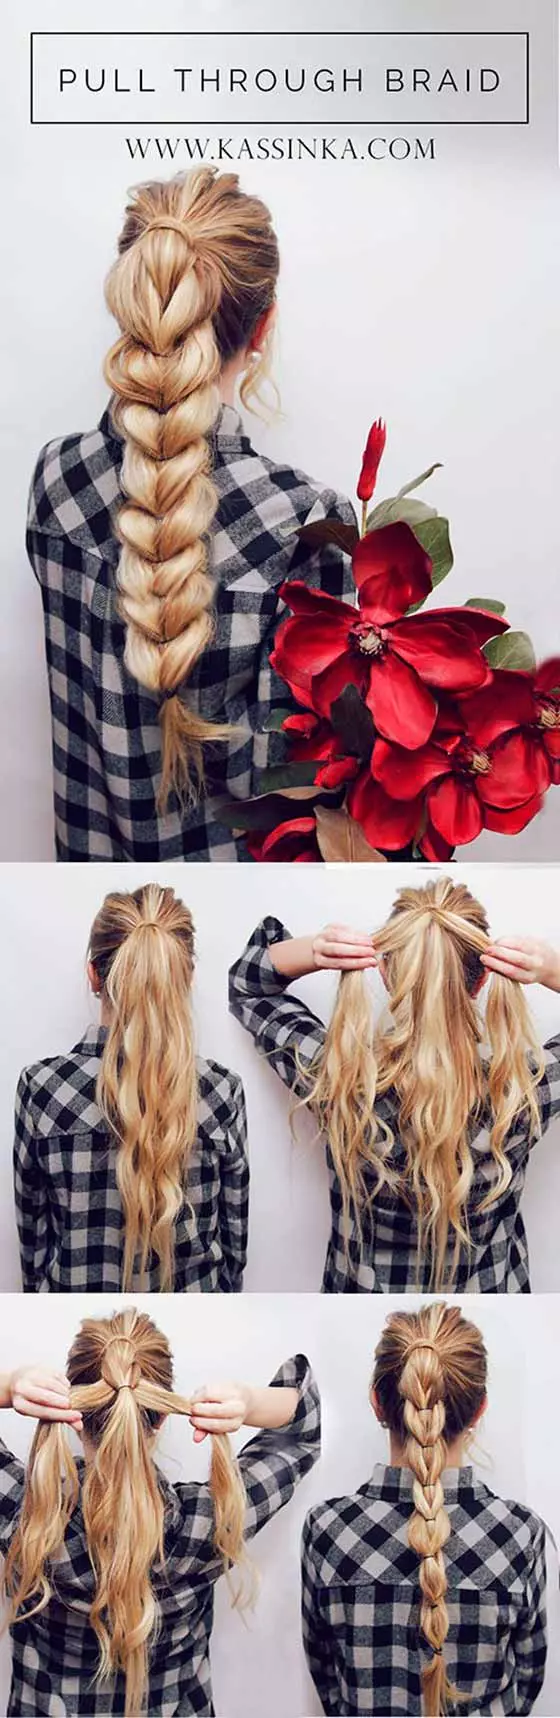 Pull-through braided hairstyle for long hair